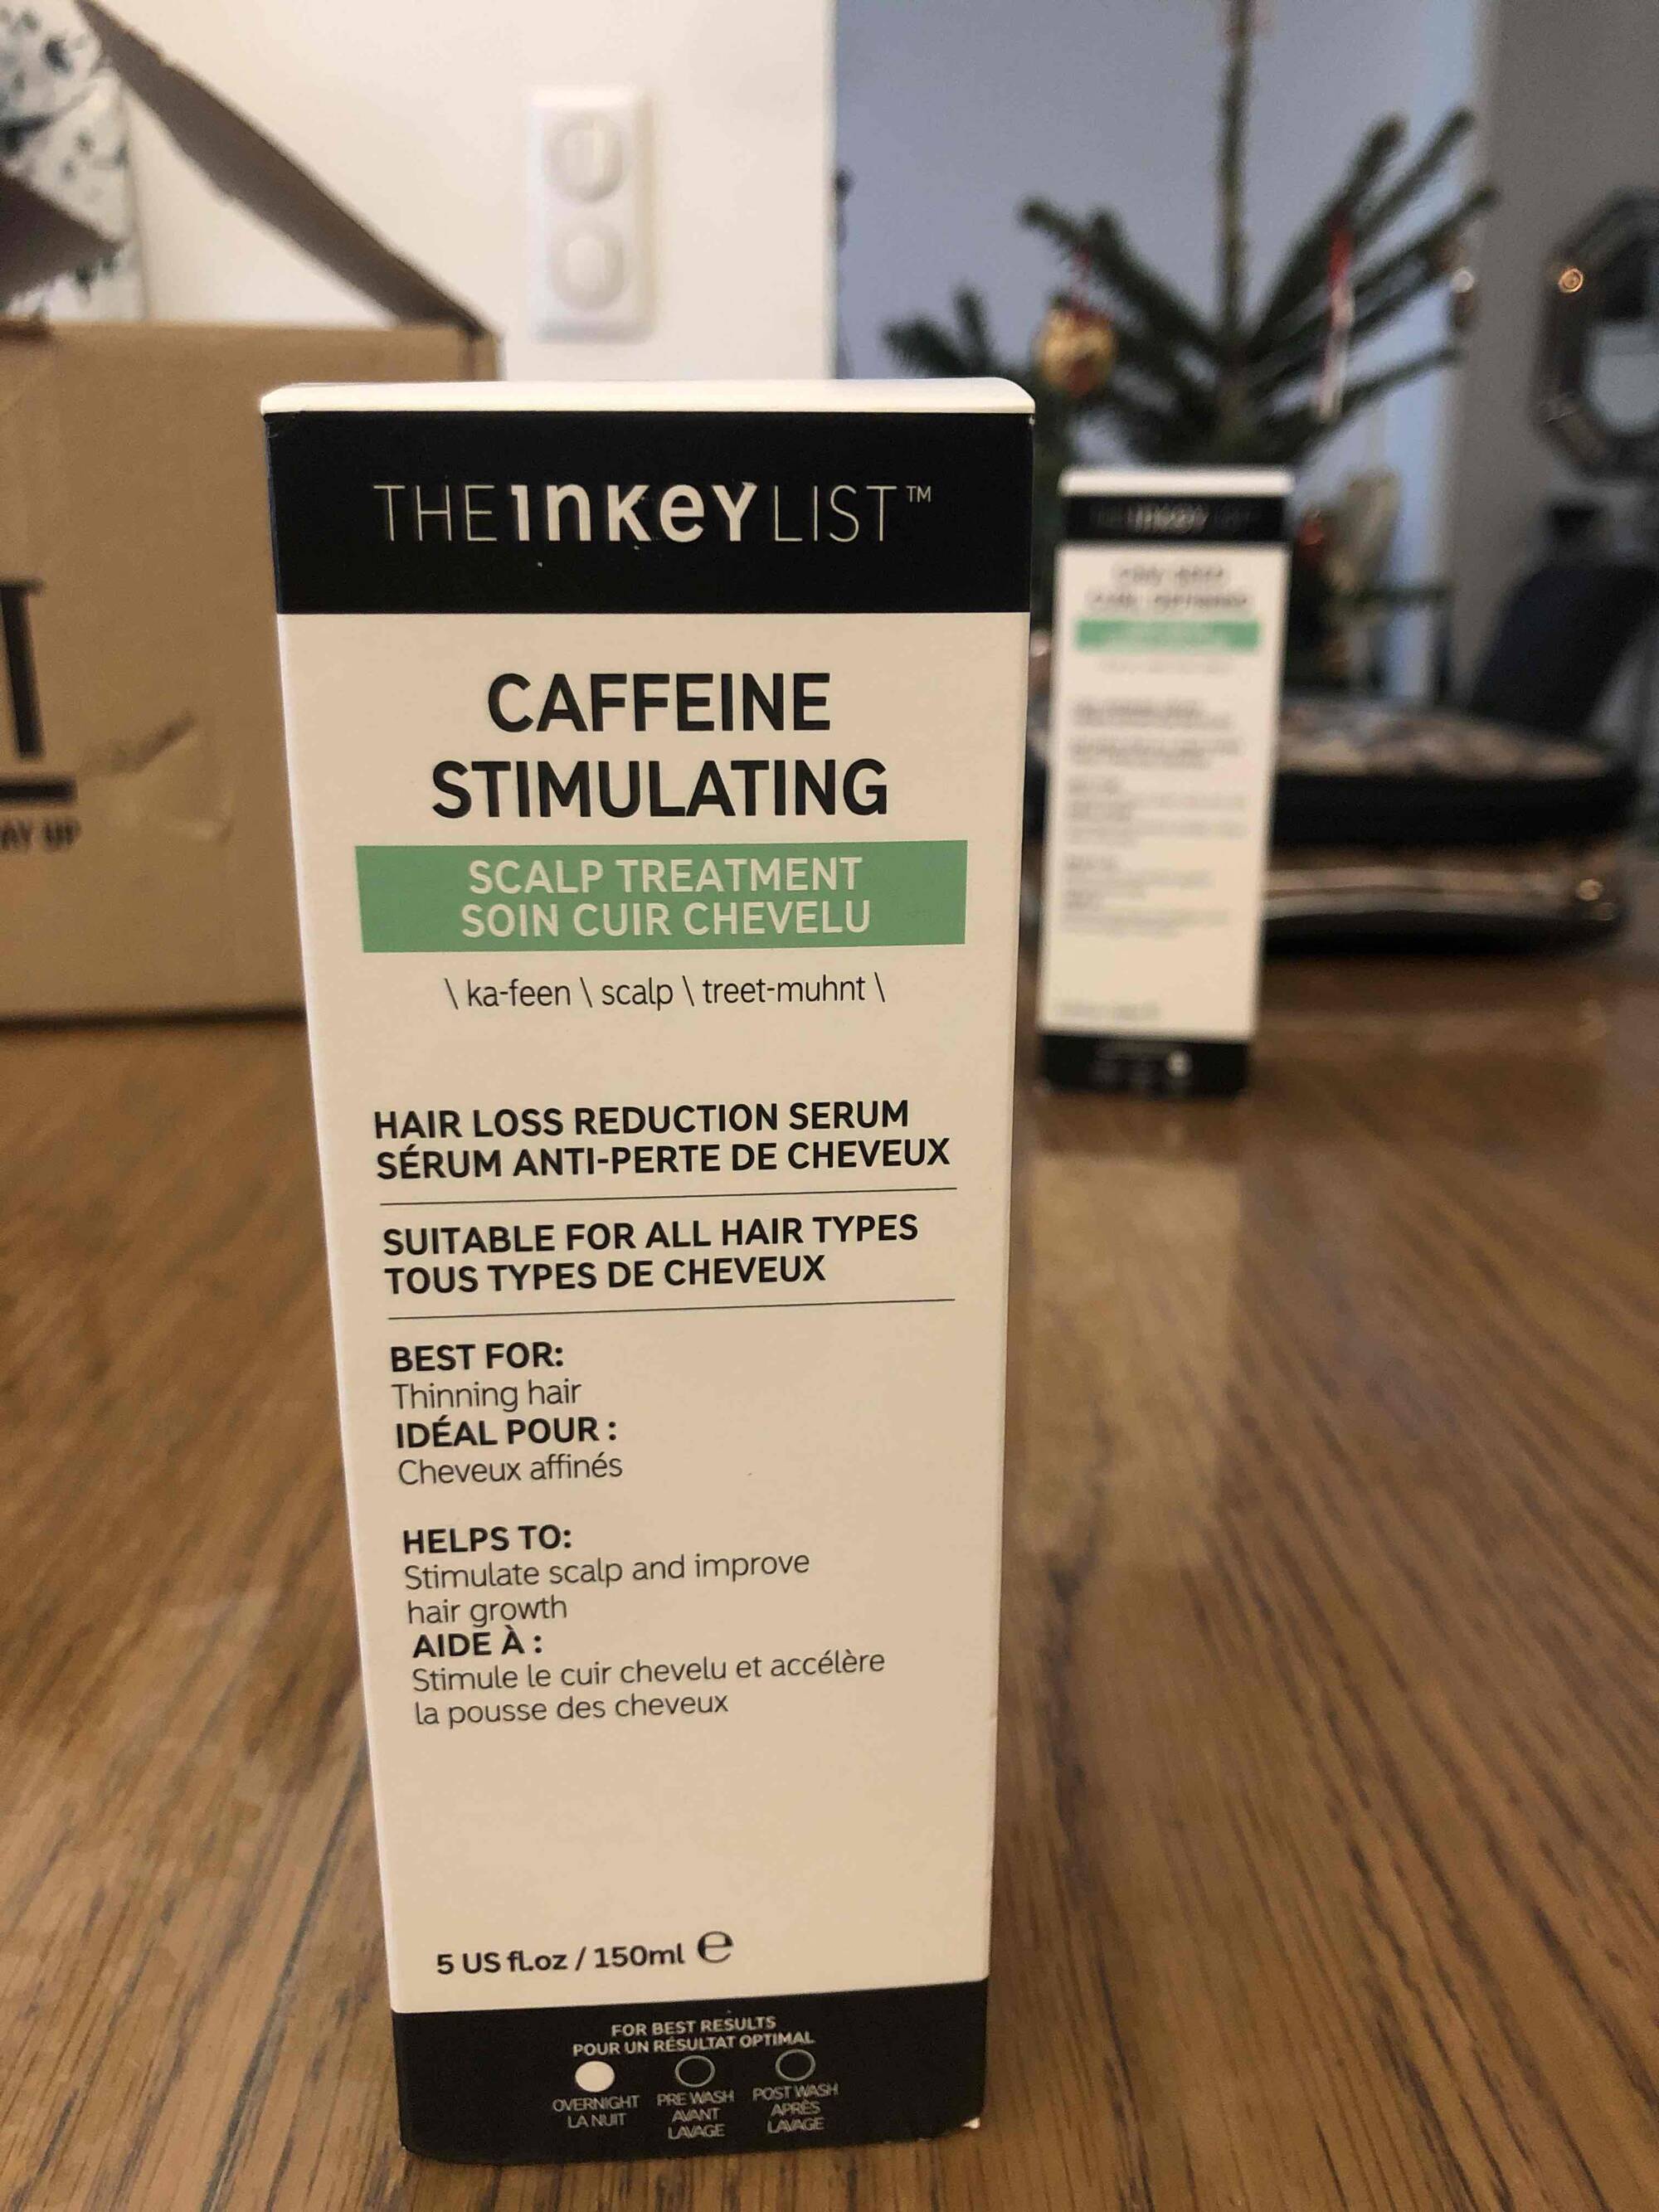 THE INKEY LIST - Caffeine stimulating - Sérum anti-perte de cheveux